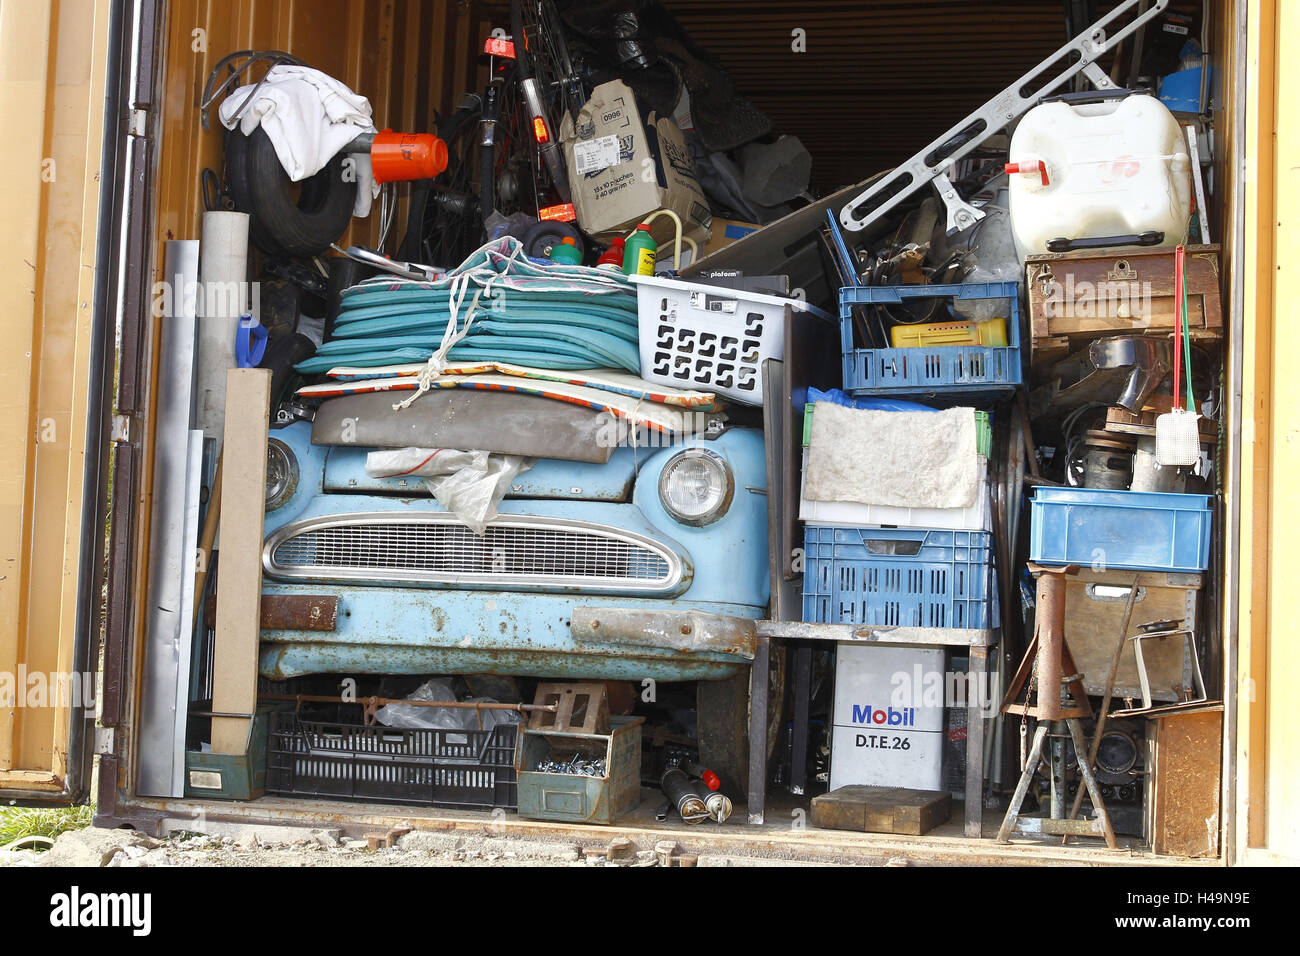 Garage, Lloyd Oldtimer, barn finding under scrap metal Stock Photo